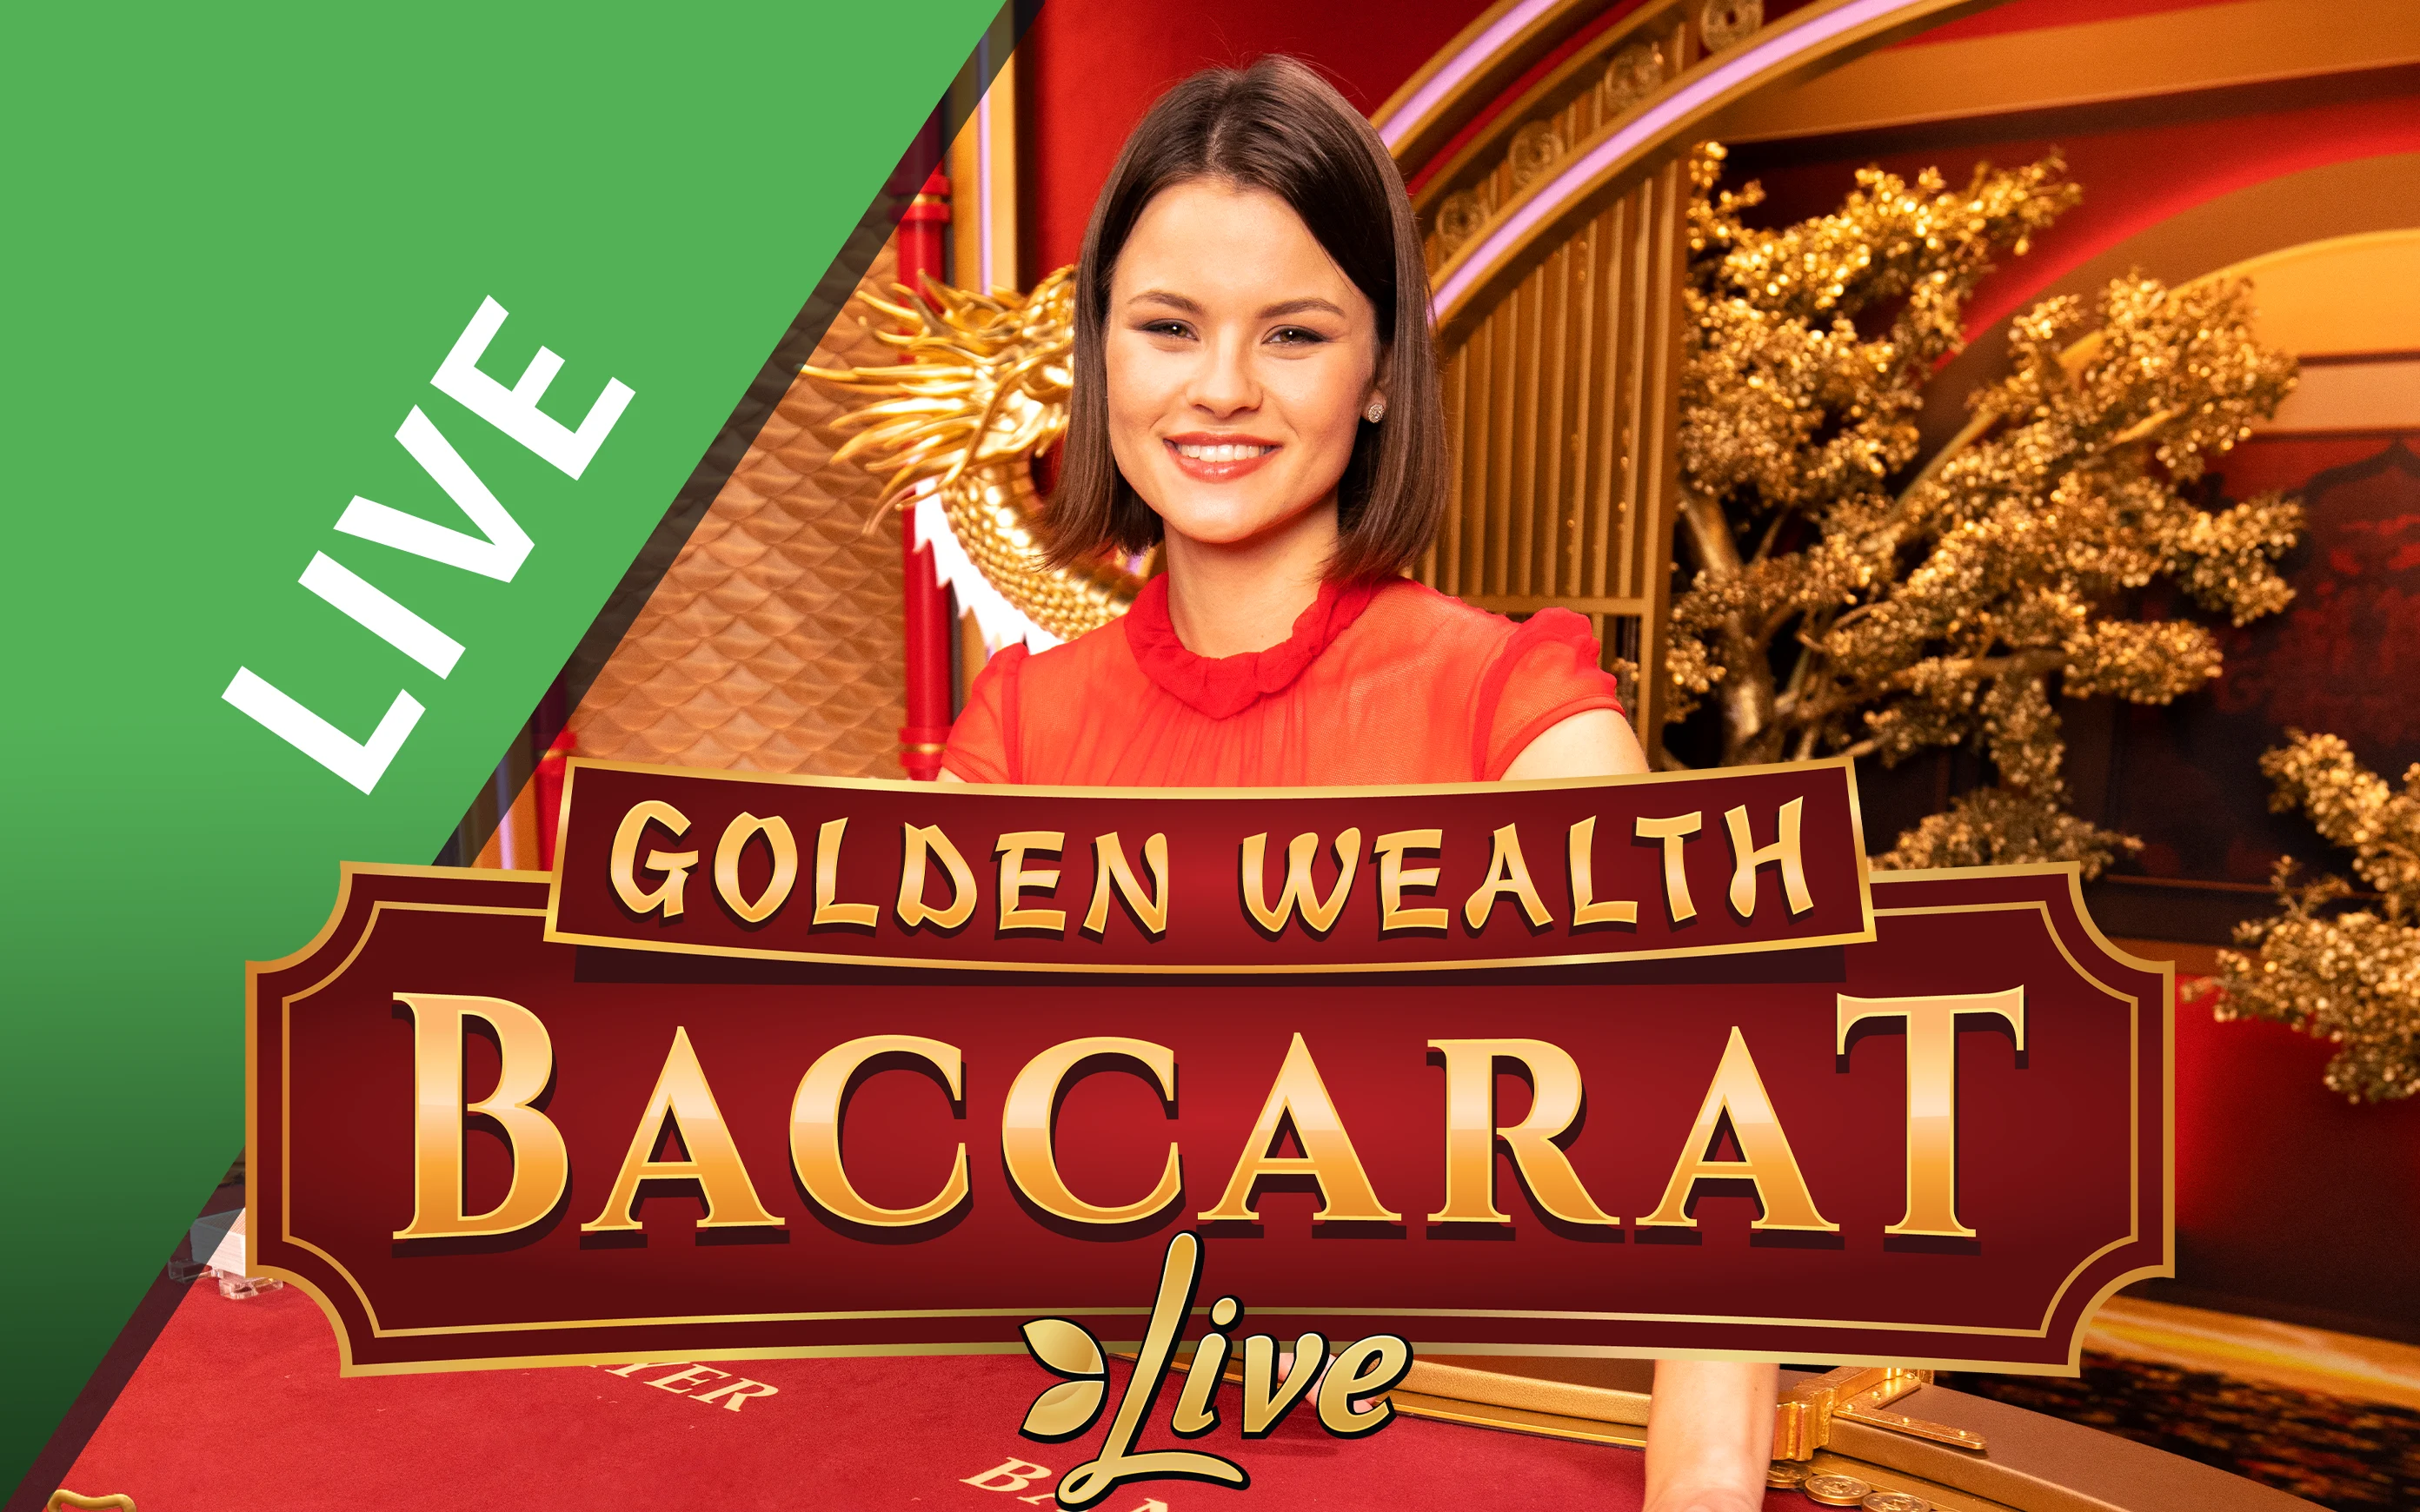 Joacă Golden Wealth Baccarat în cazinoul online Starcasino.be